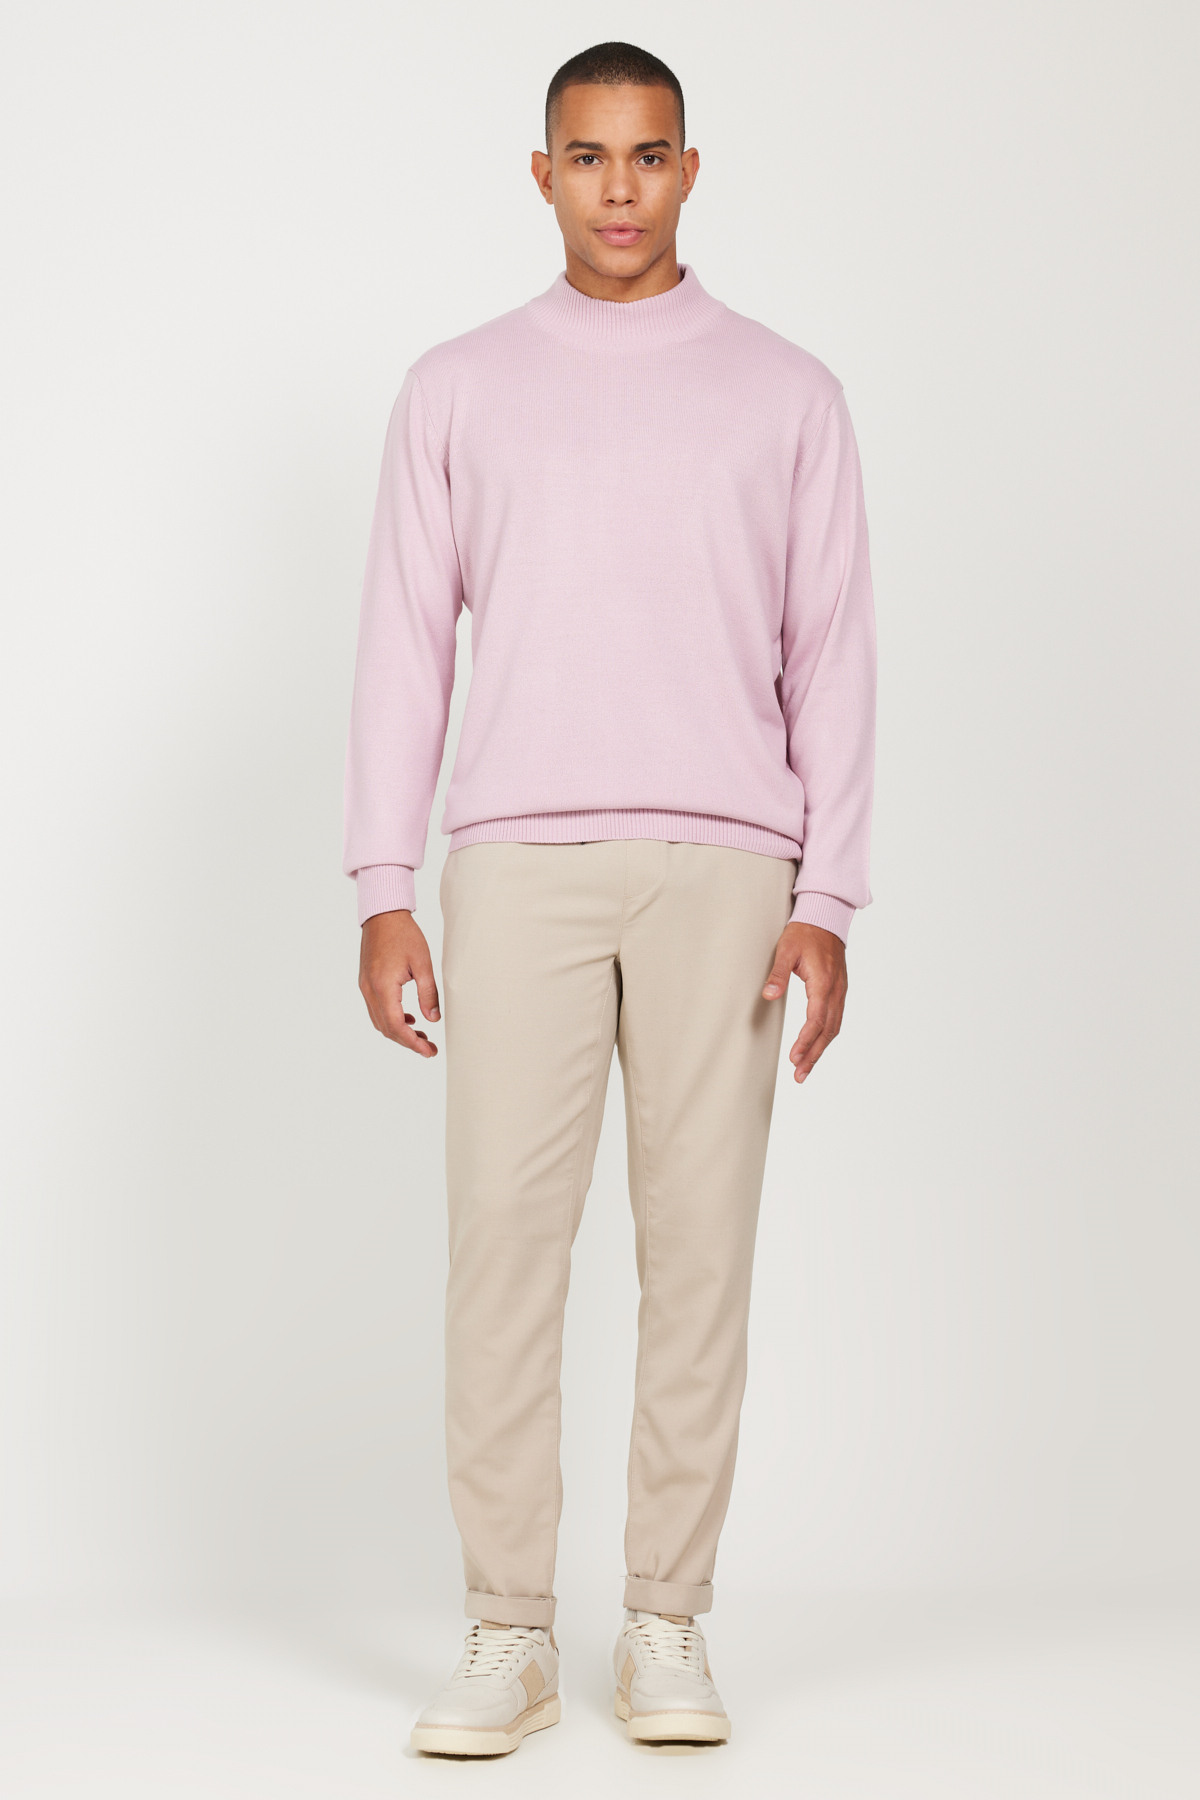 ALTINYILDIZ CLASSICS Men's Pale Pink Anti-Pilling Anti-Pilling Standard Fit Half Turtleneck Knitwear Sweater